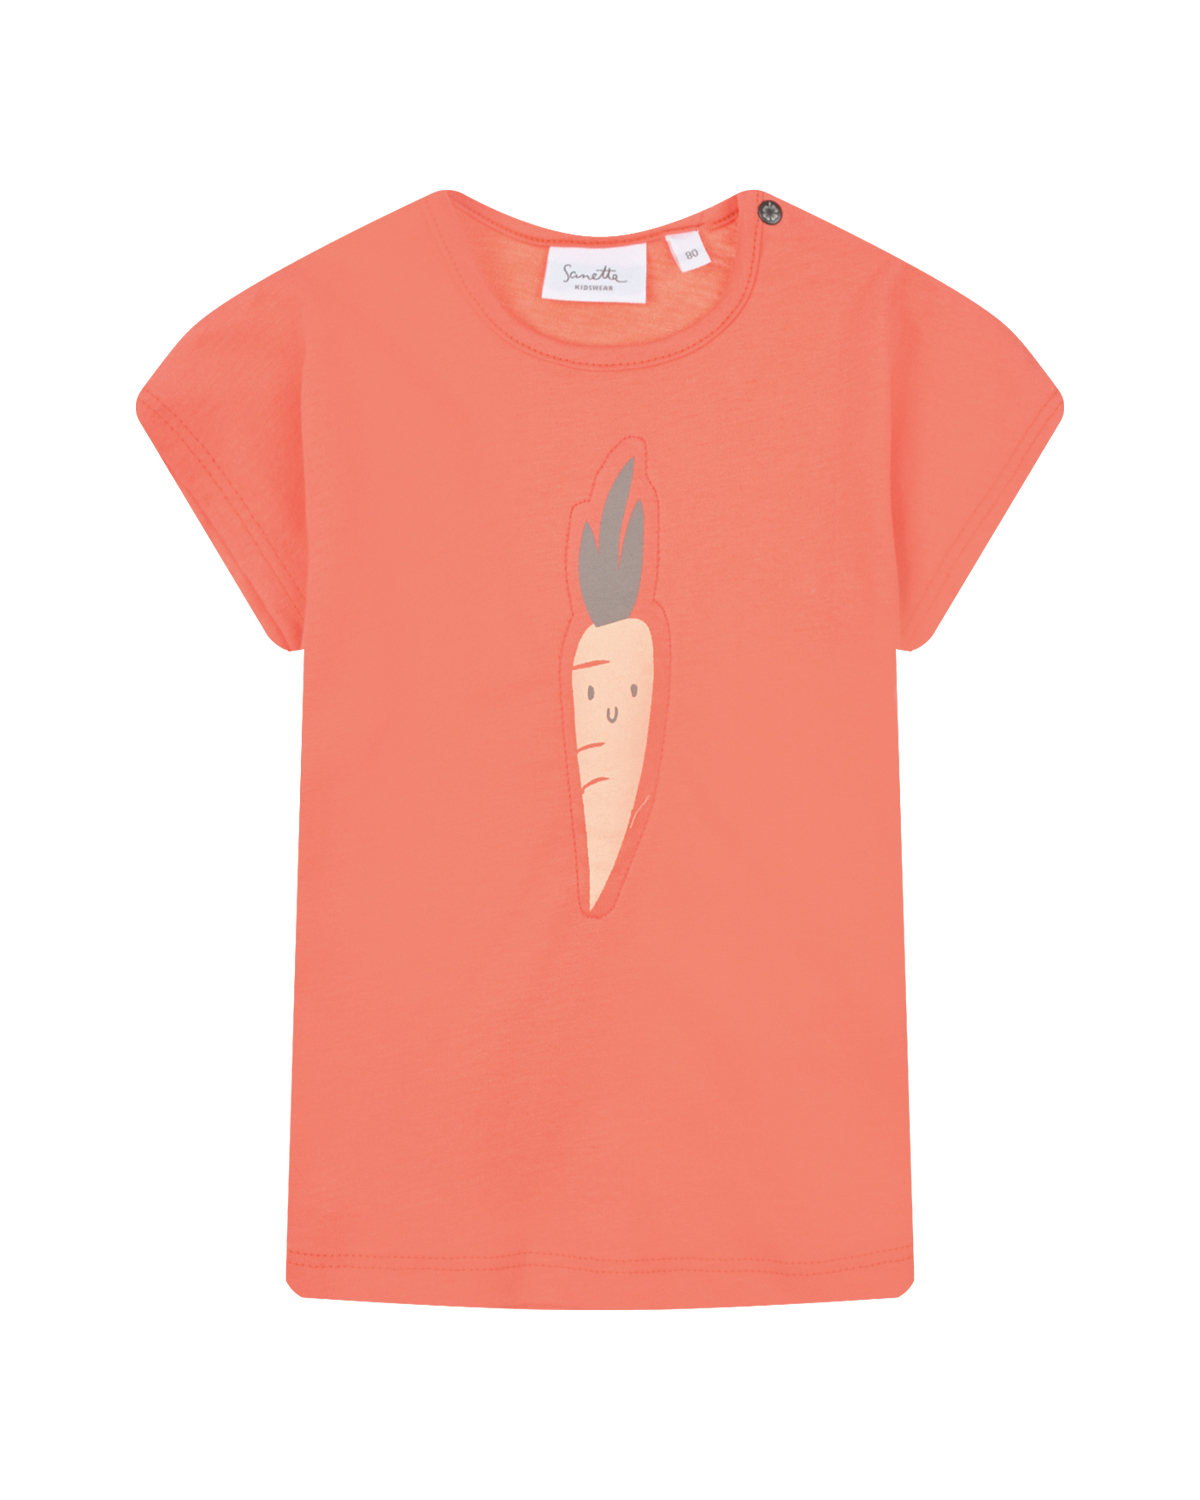 Оранжевая футболка с принтом "морковь" Sanetta Kidswear, размер 92, цвет оранжевый - фото 1